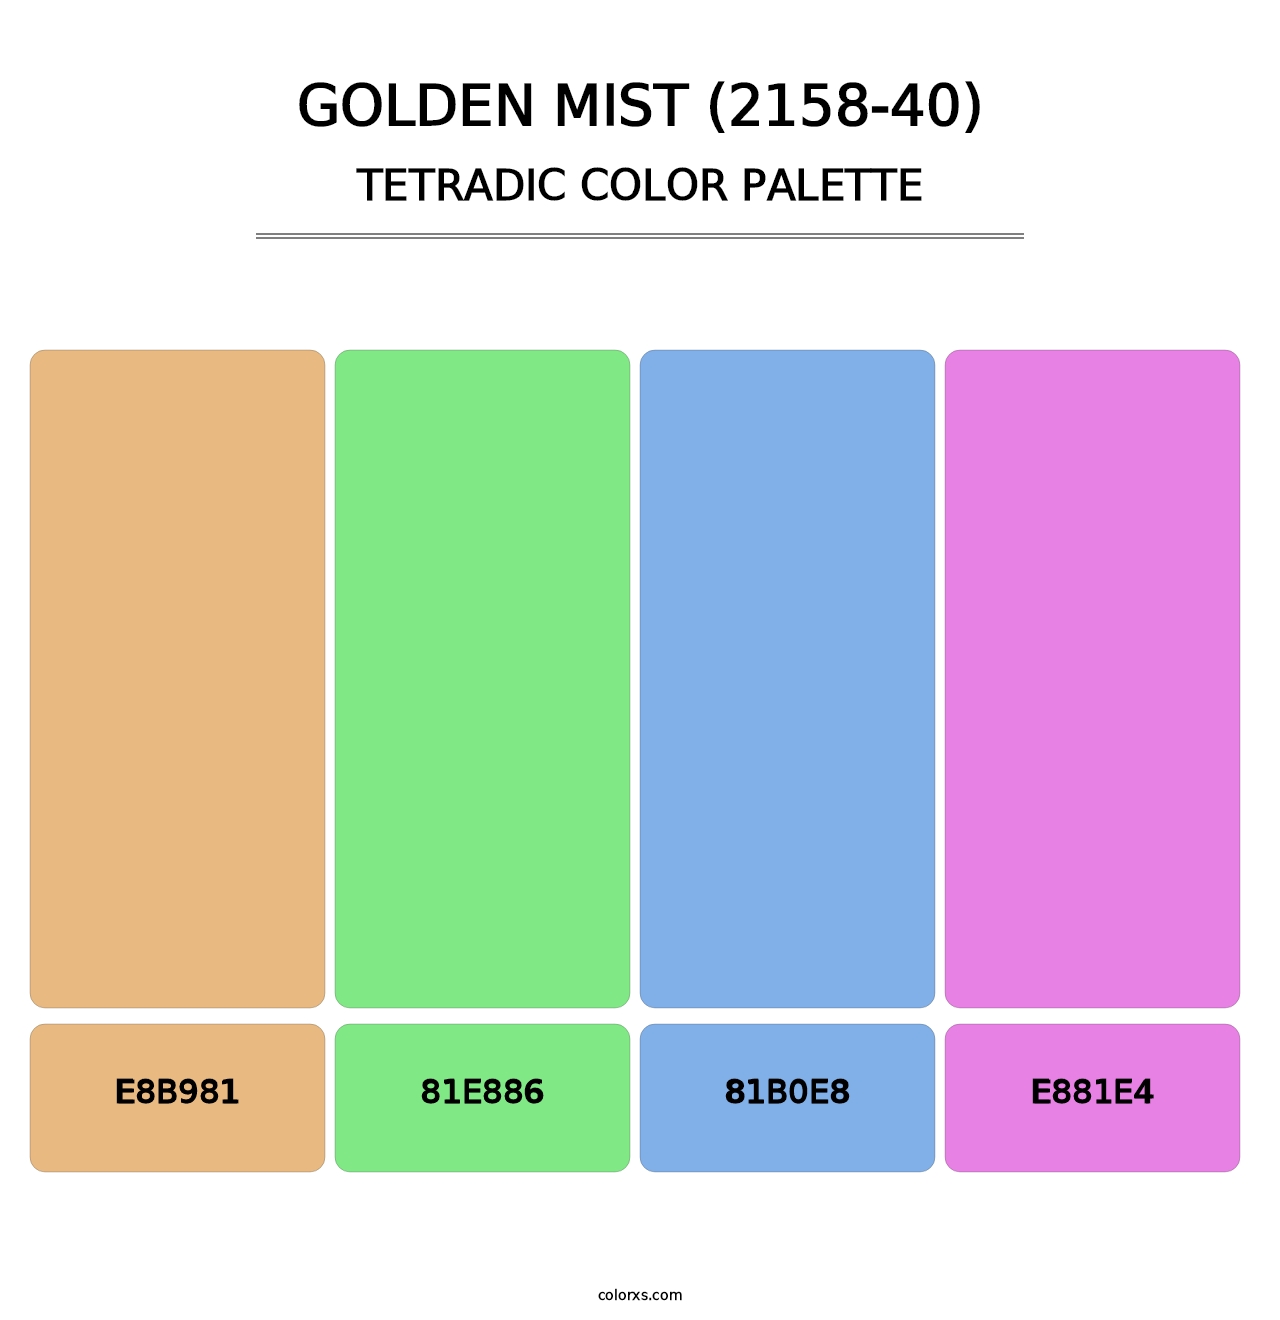 Golden Mist (2158-40) - Tetradic Color Palette